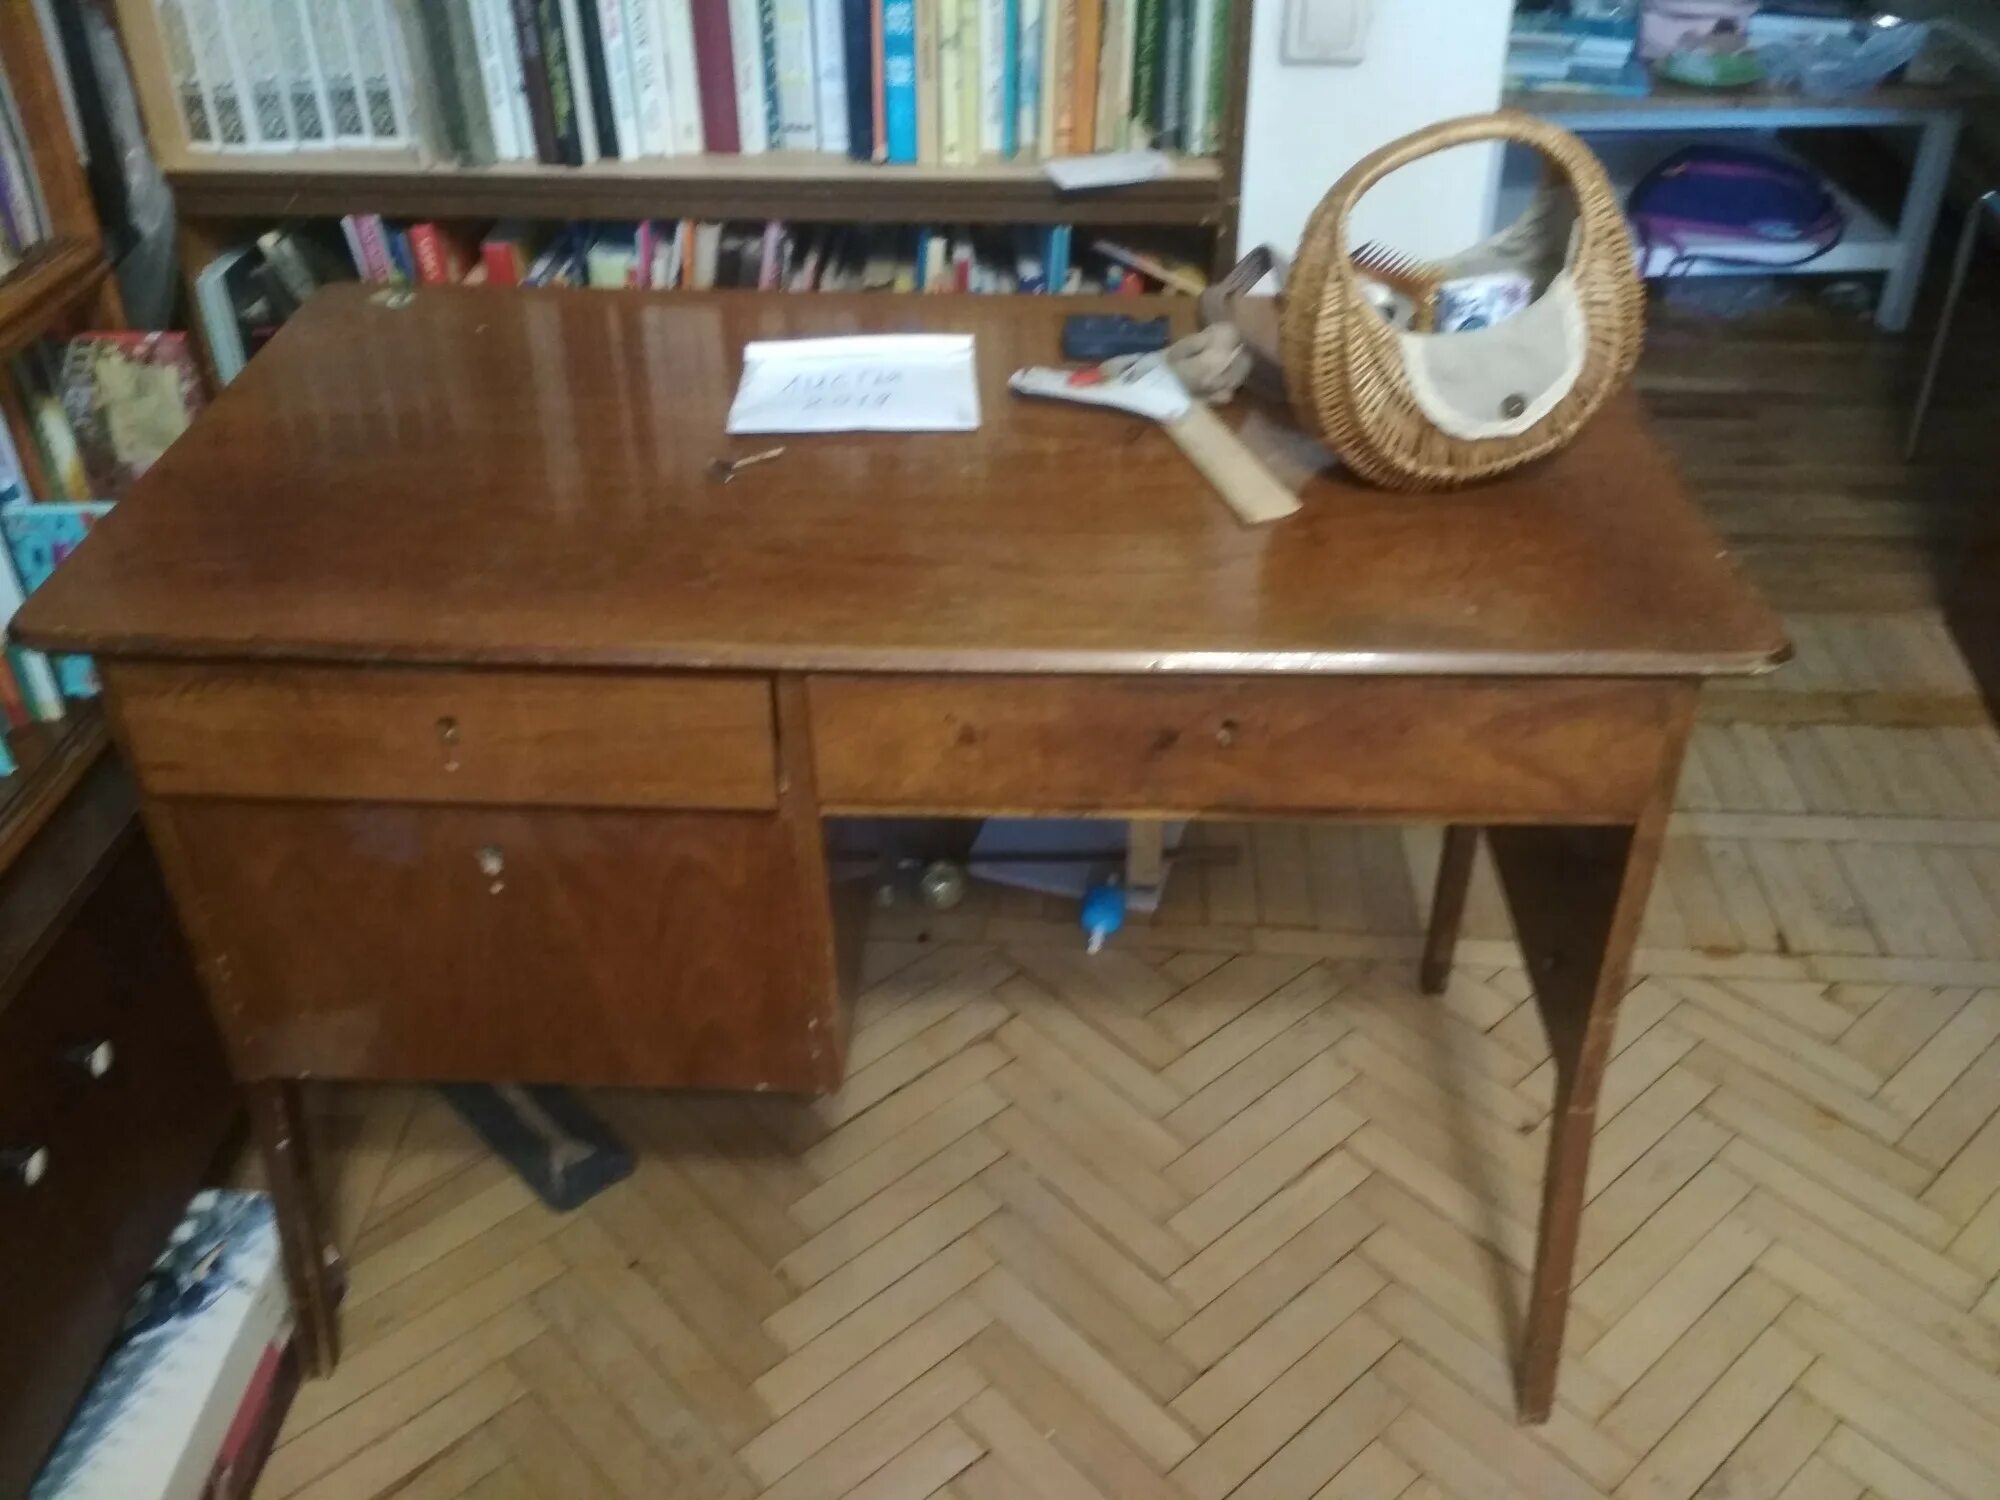 Письменный стол Оникс Румыния. Румынский письменный стол. Советский стол письменный для школьника. Письменный стол 70е.